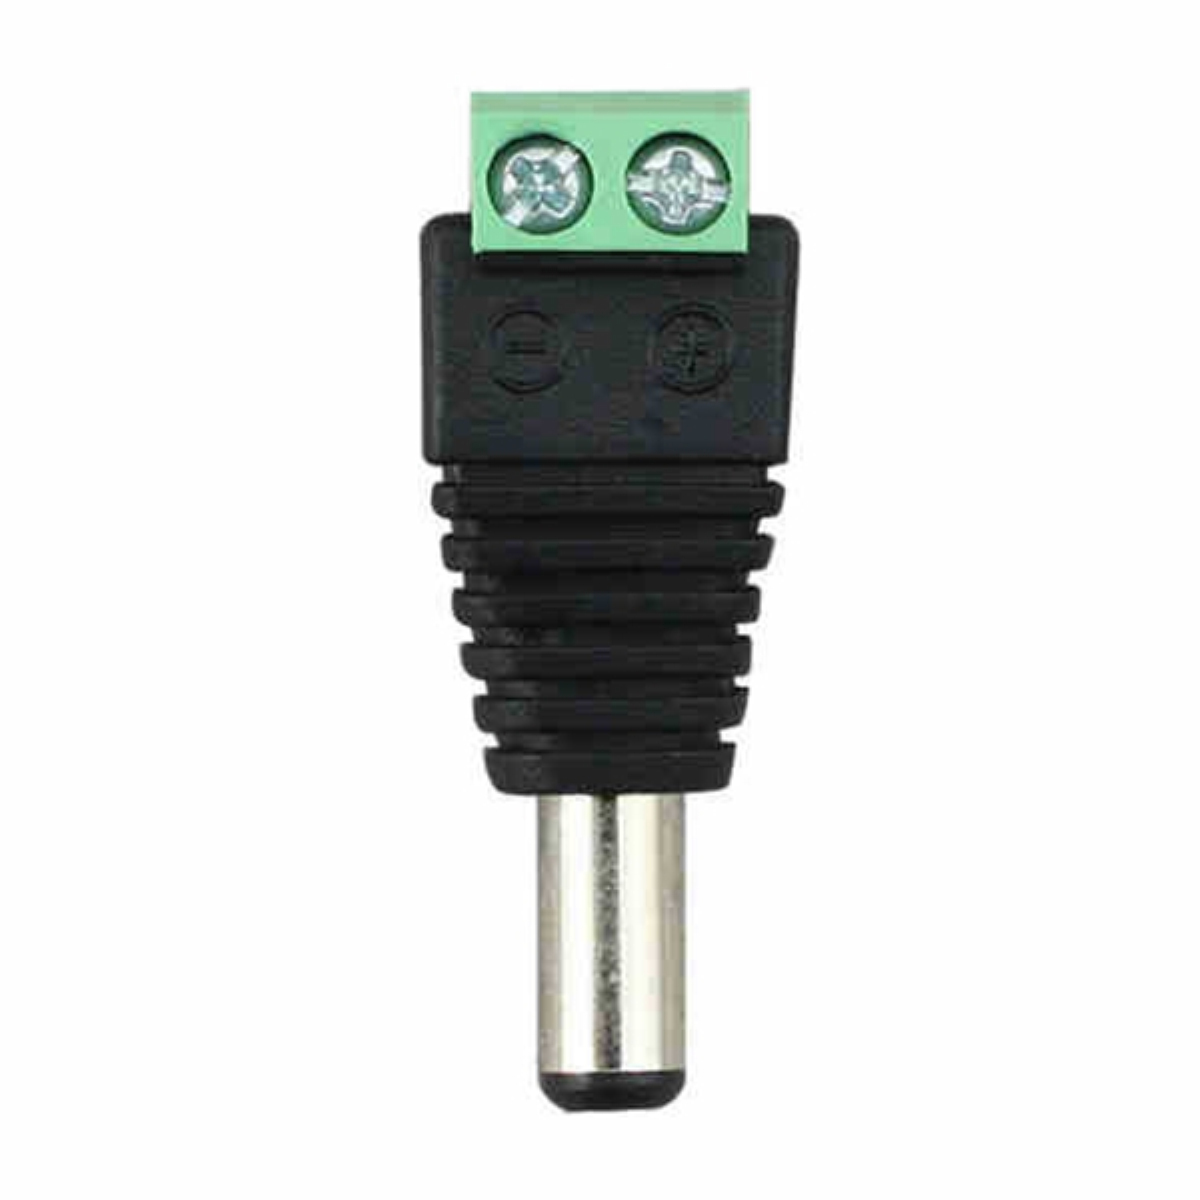 10PCS-5521mm-DC-Power-Male-Plug-Jack-Adapter-Connector-for-CCTV-LED-5050-3528-5630-Strip-Light-1372905